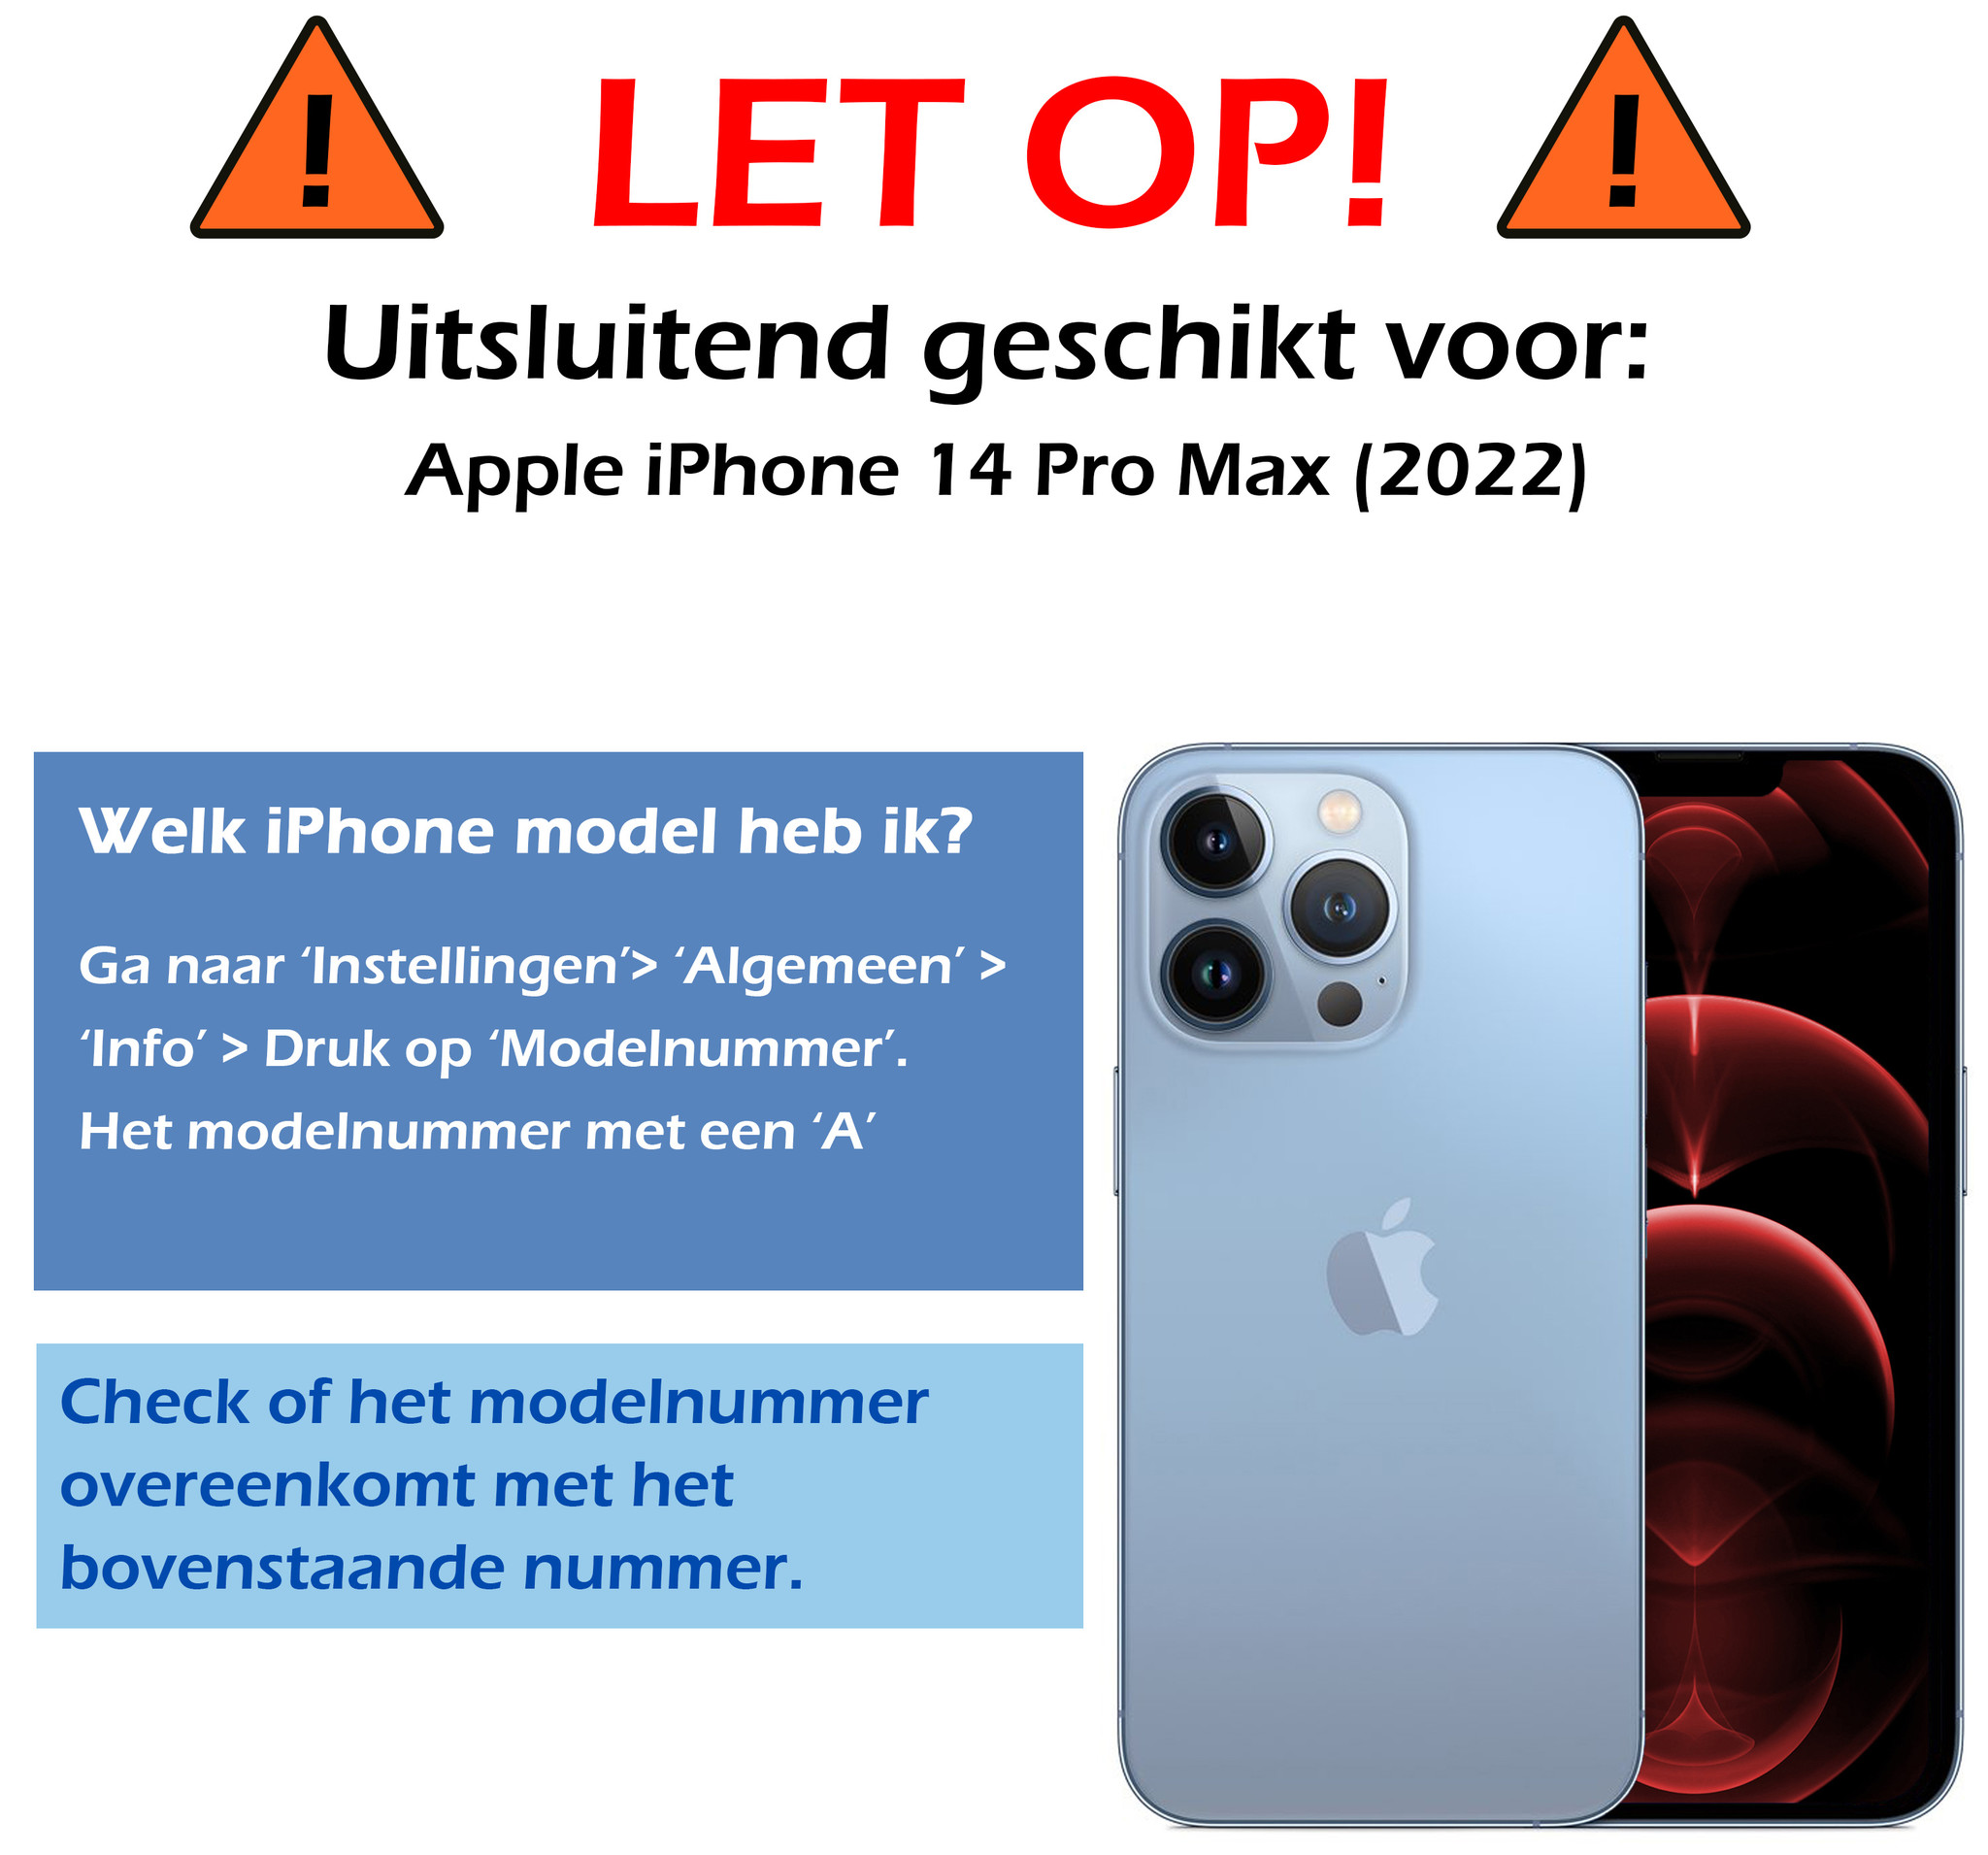 Hoes voor iPhone 14 Pro Max Hoesje Siliconen Case Back Cover - Hoes voor iPhone 14 Pro Max Hoes Cover Silicone - Donker Blauw - 2X